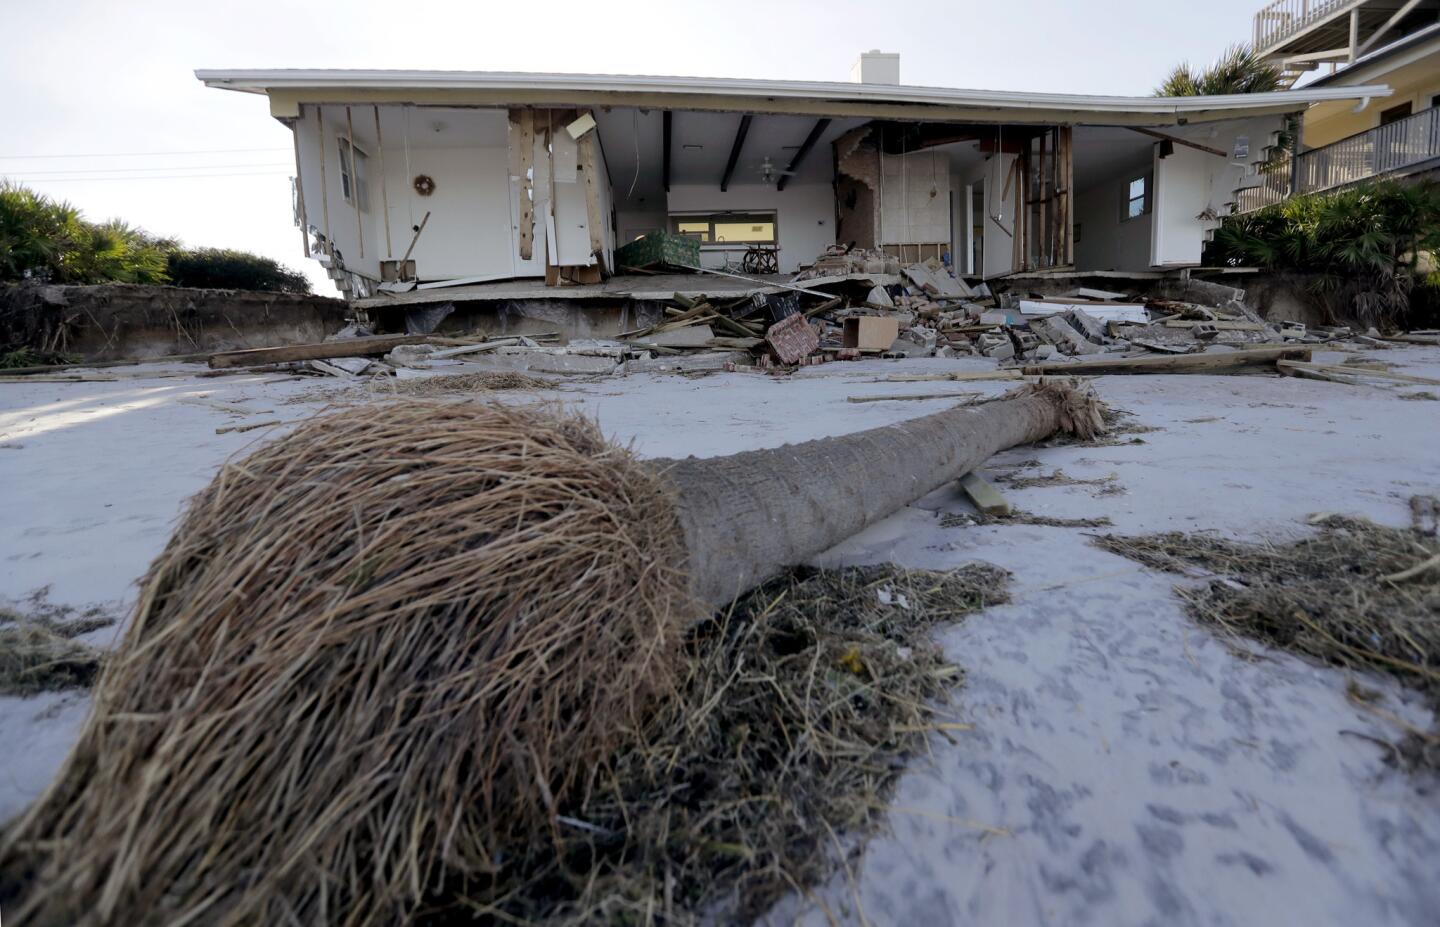 A damaged beach home stands beyond a fallen palm tree at Ponte Vedra Beach, Fla., on Oct. 8, 2016, after Hurricane Matthew passed through.